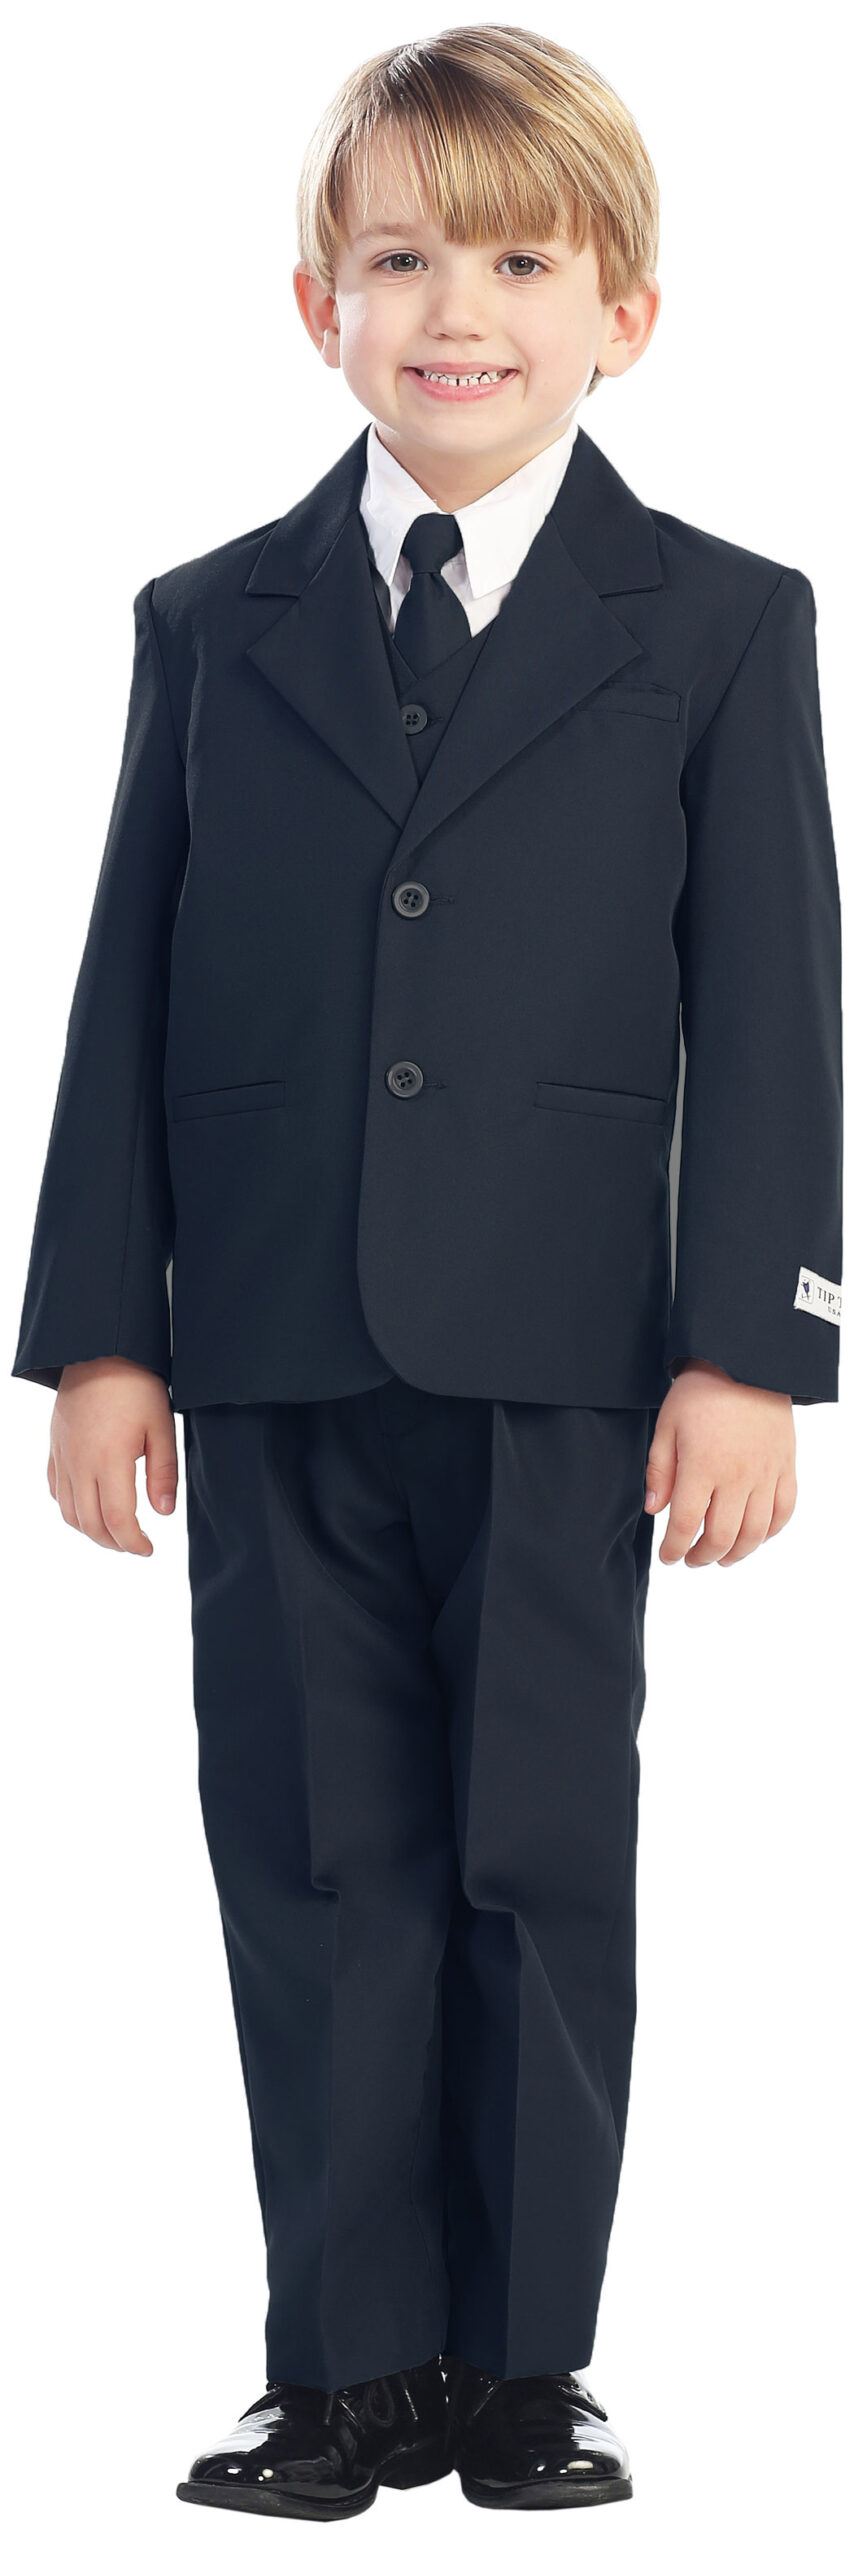 Avery Hill 5-Piece Boy's 2-Button Dress Suit Full-Back Vest - Navy Blue S (3 - 6 Months)